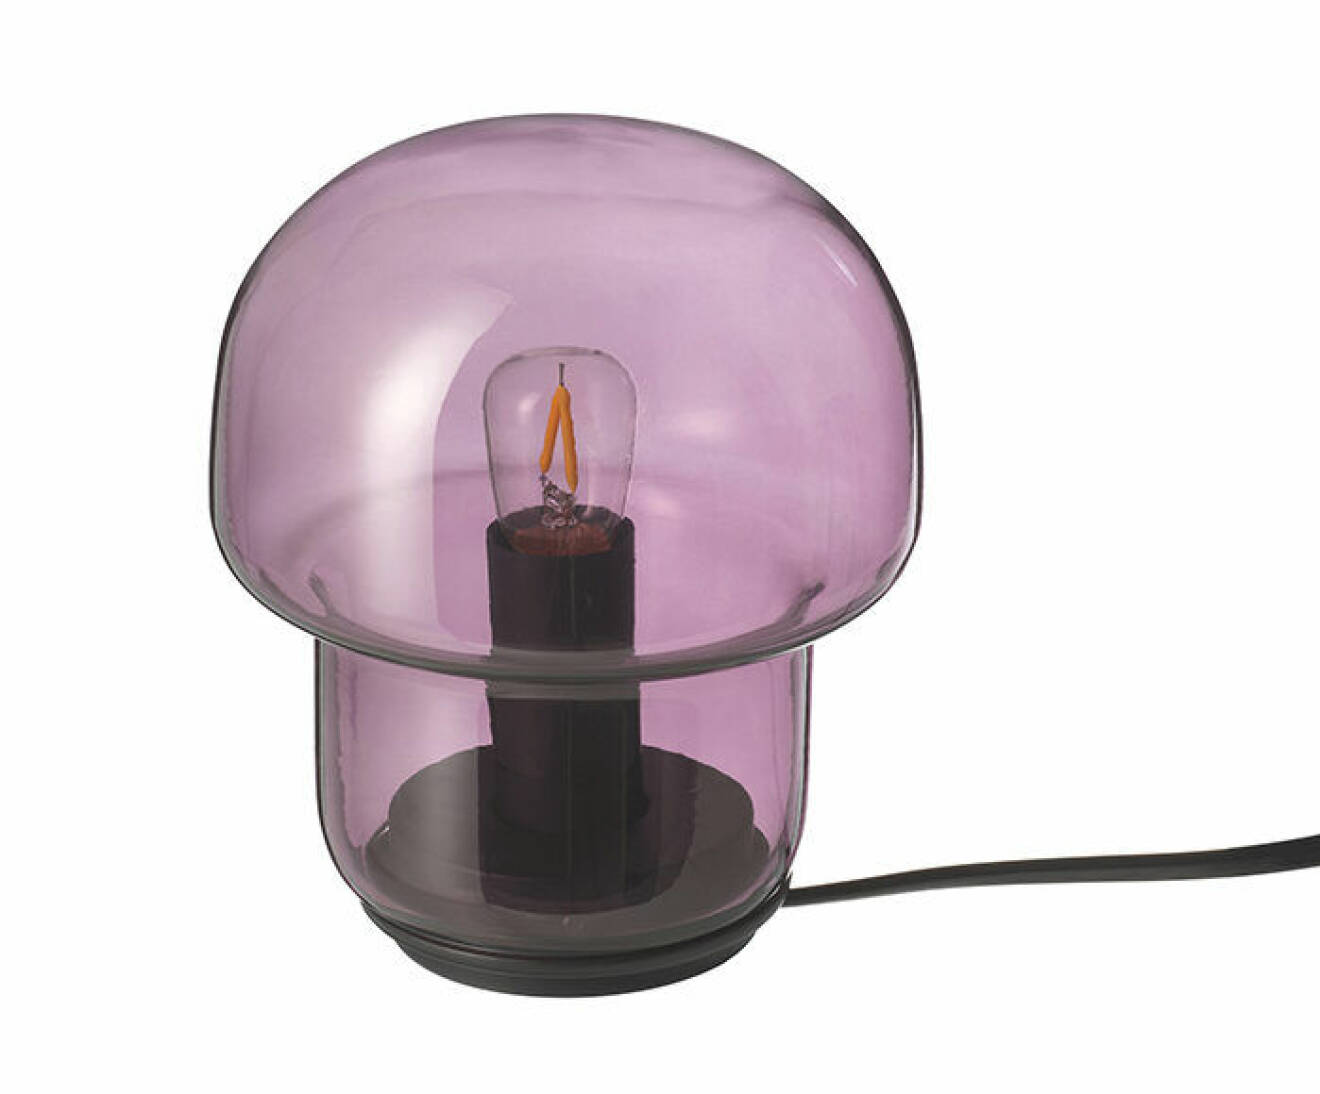 Tokabo bordslampa i lila glas från Ikea